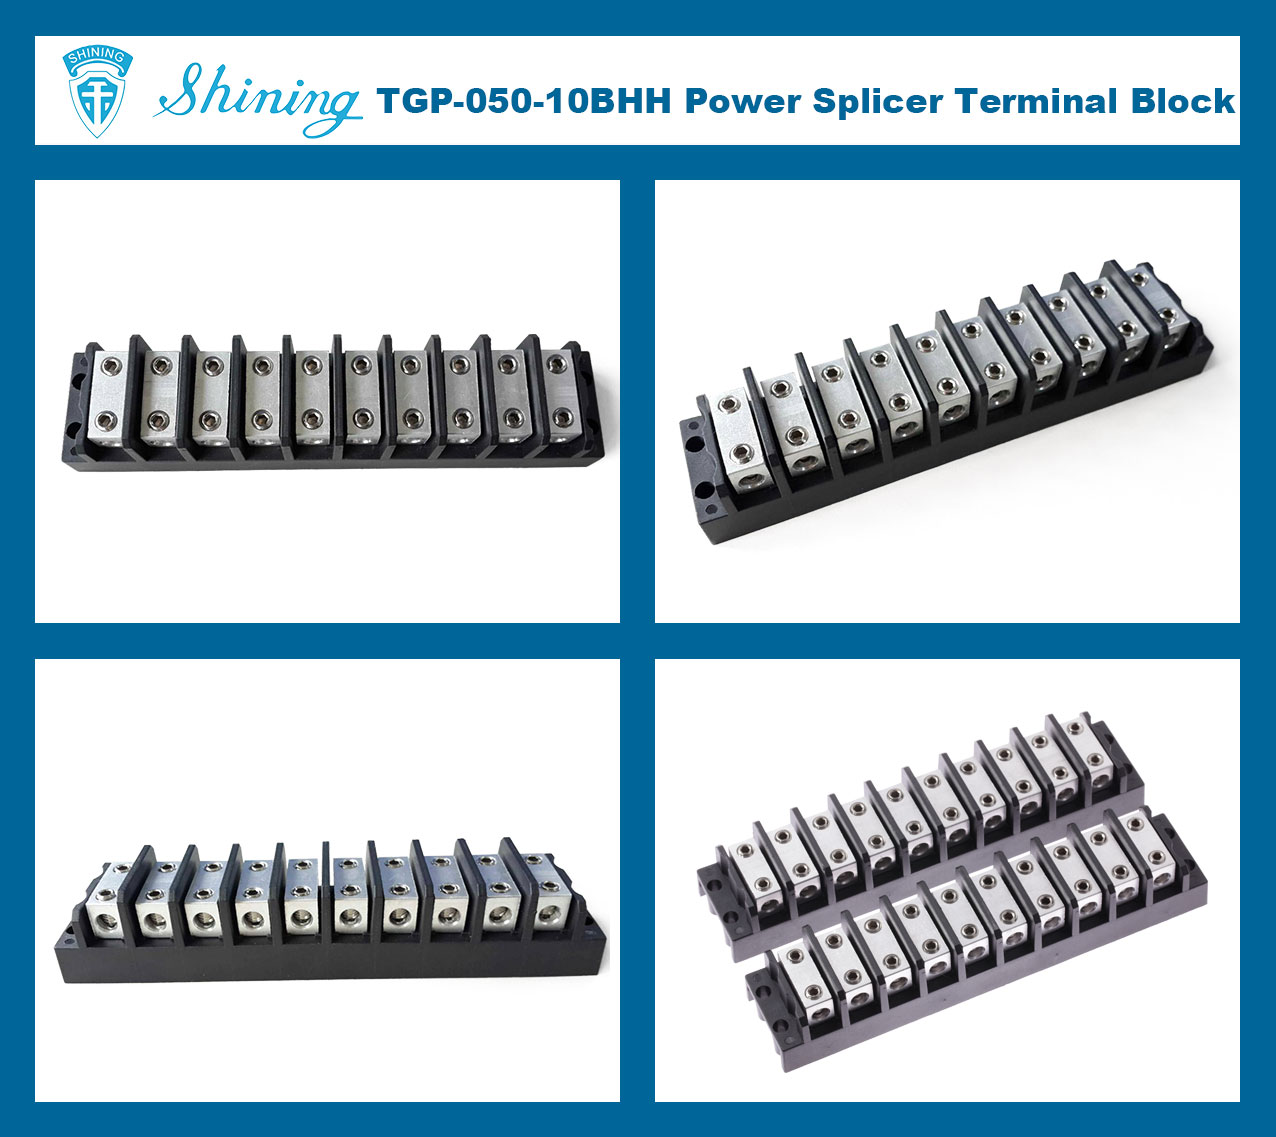 TGP-050-10BHH 600V 50A 10 Way Power Splicer Terminal Block